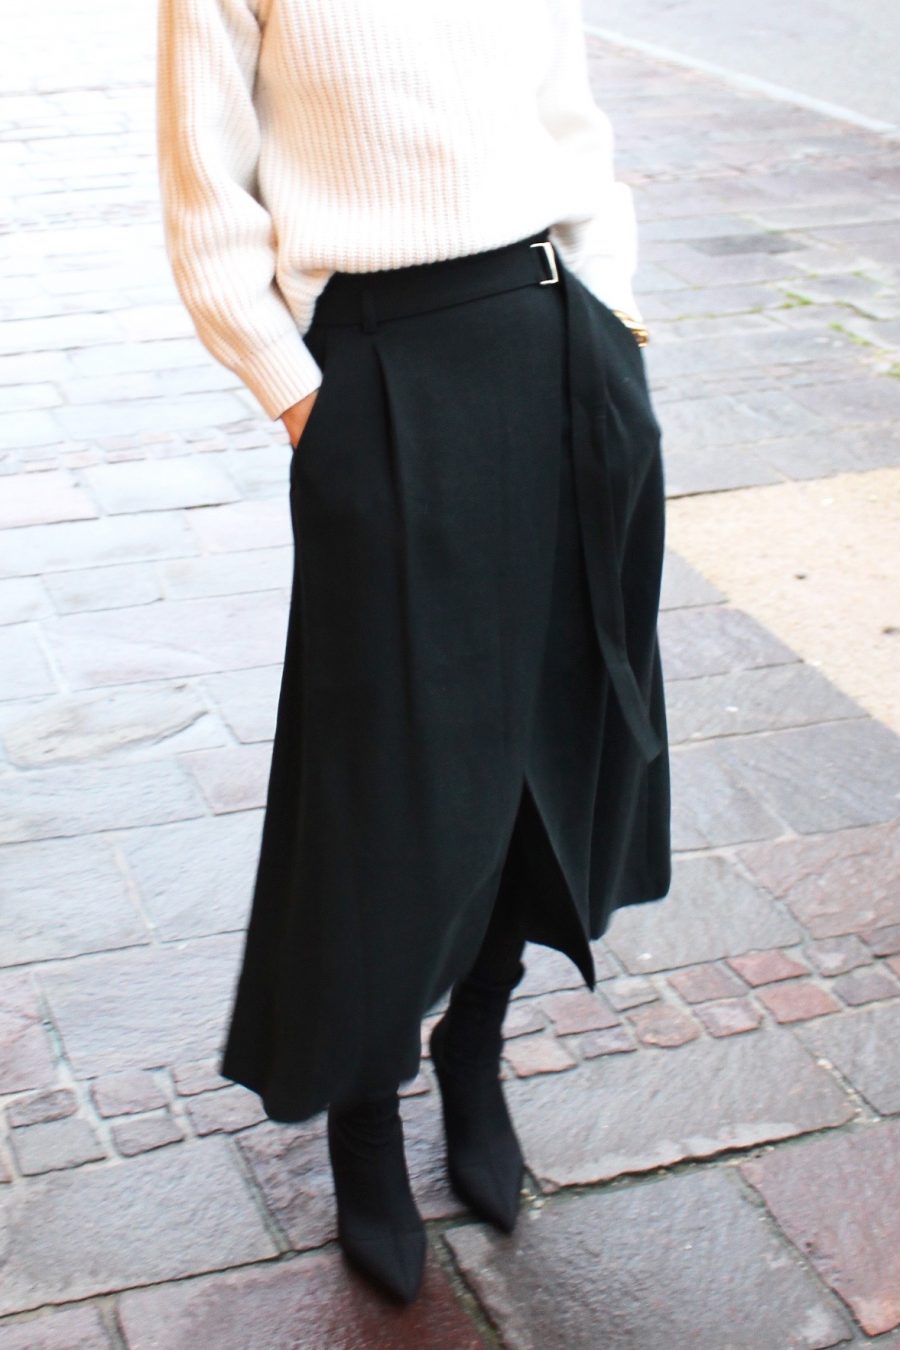 The Massimo Dutti Skirt